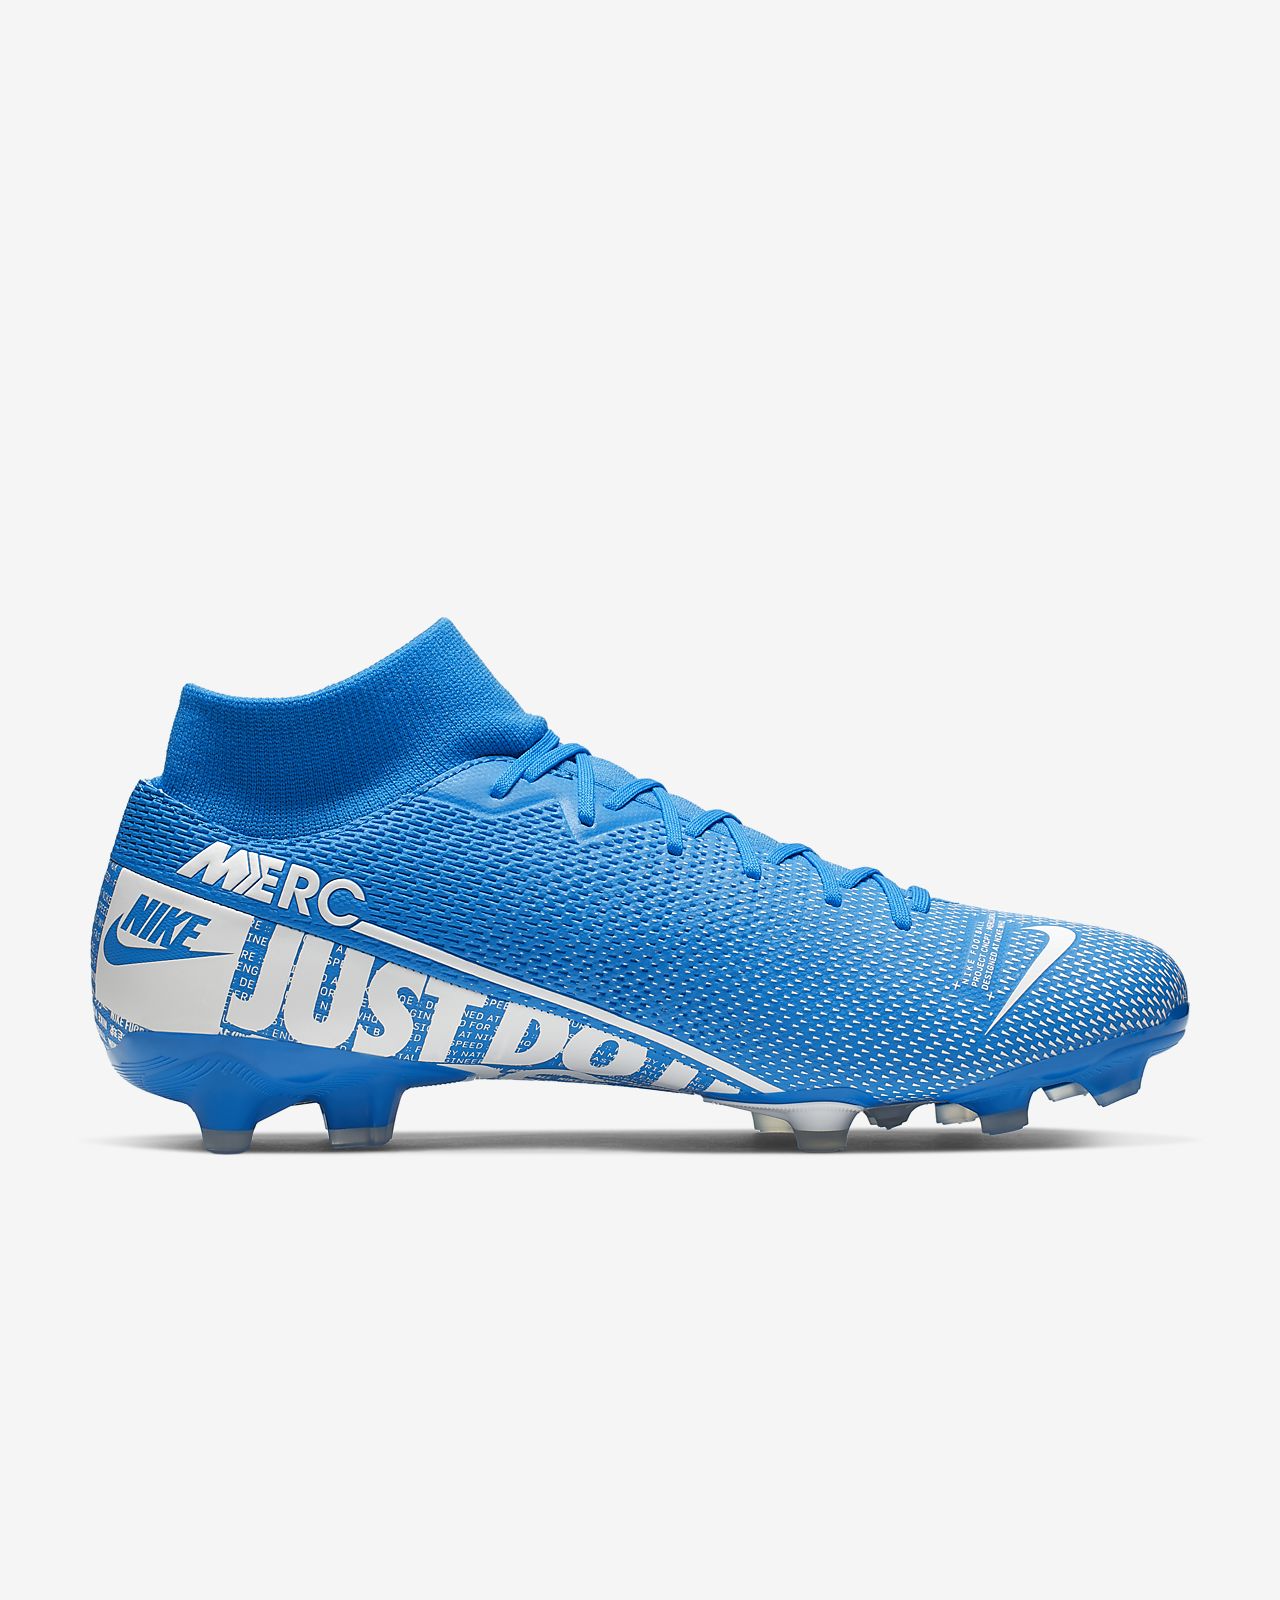 New Nike JR Mercurial Superfly 6 Elite FG Soccer Cleats.